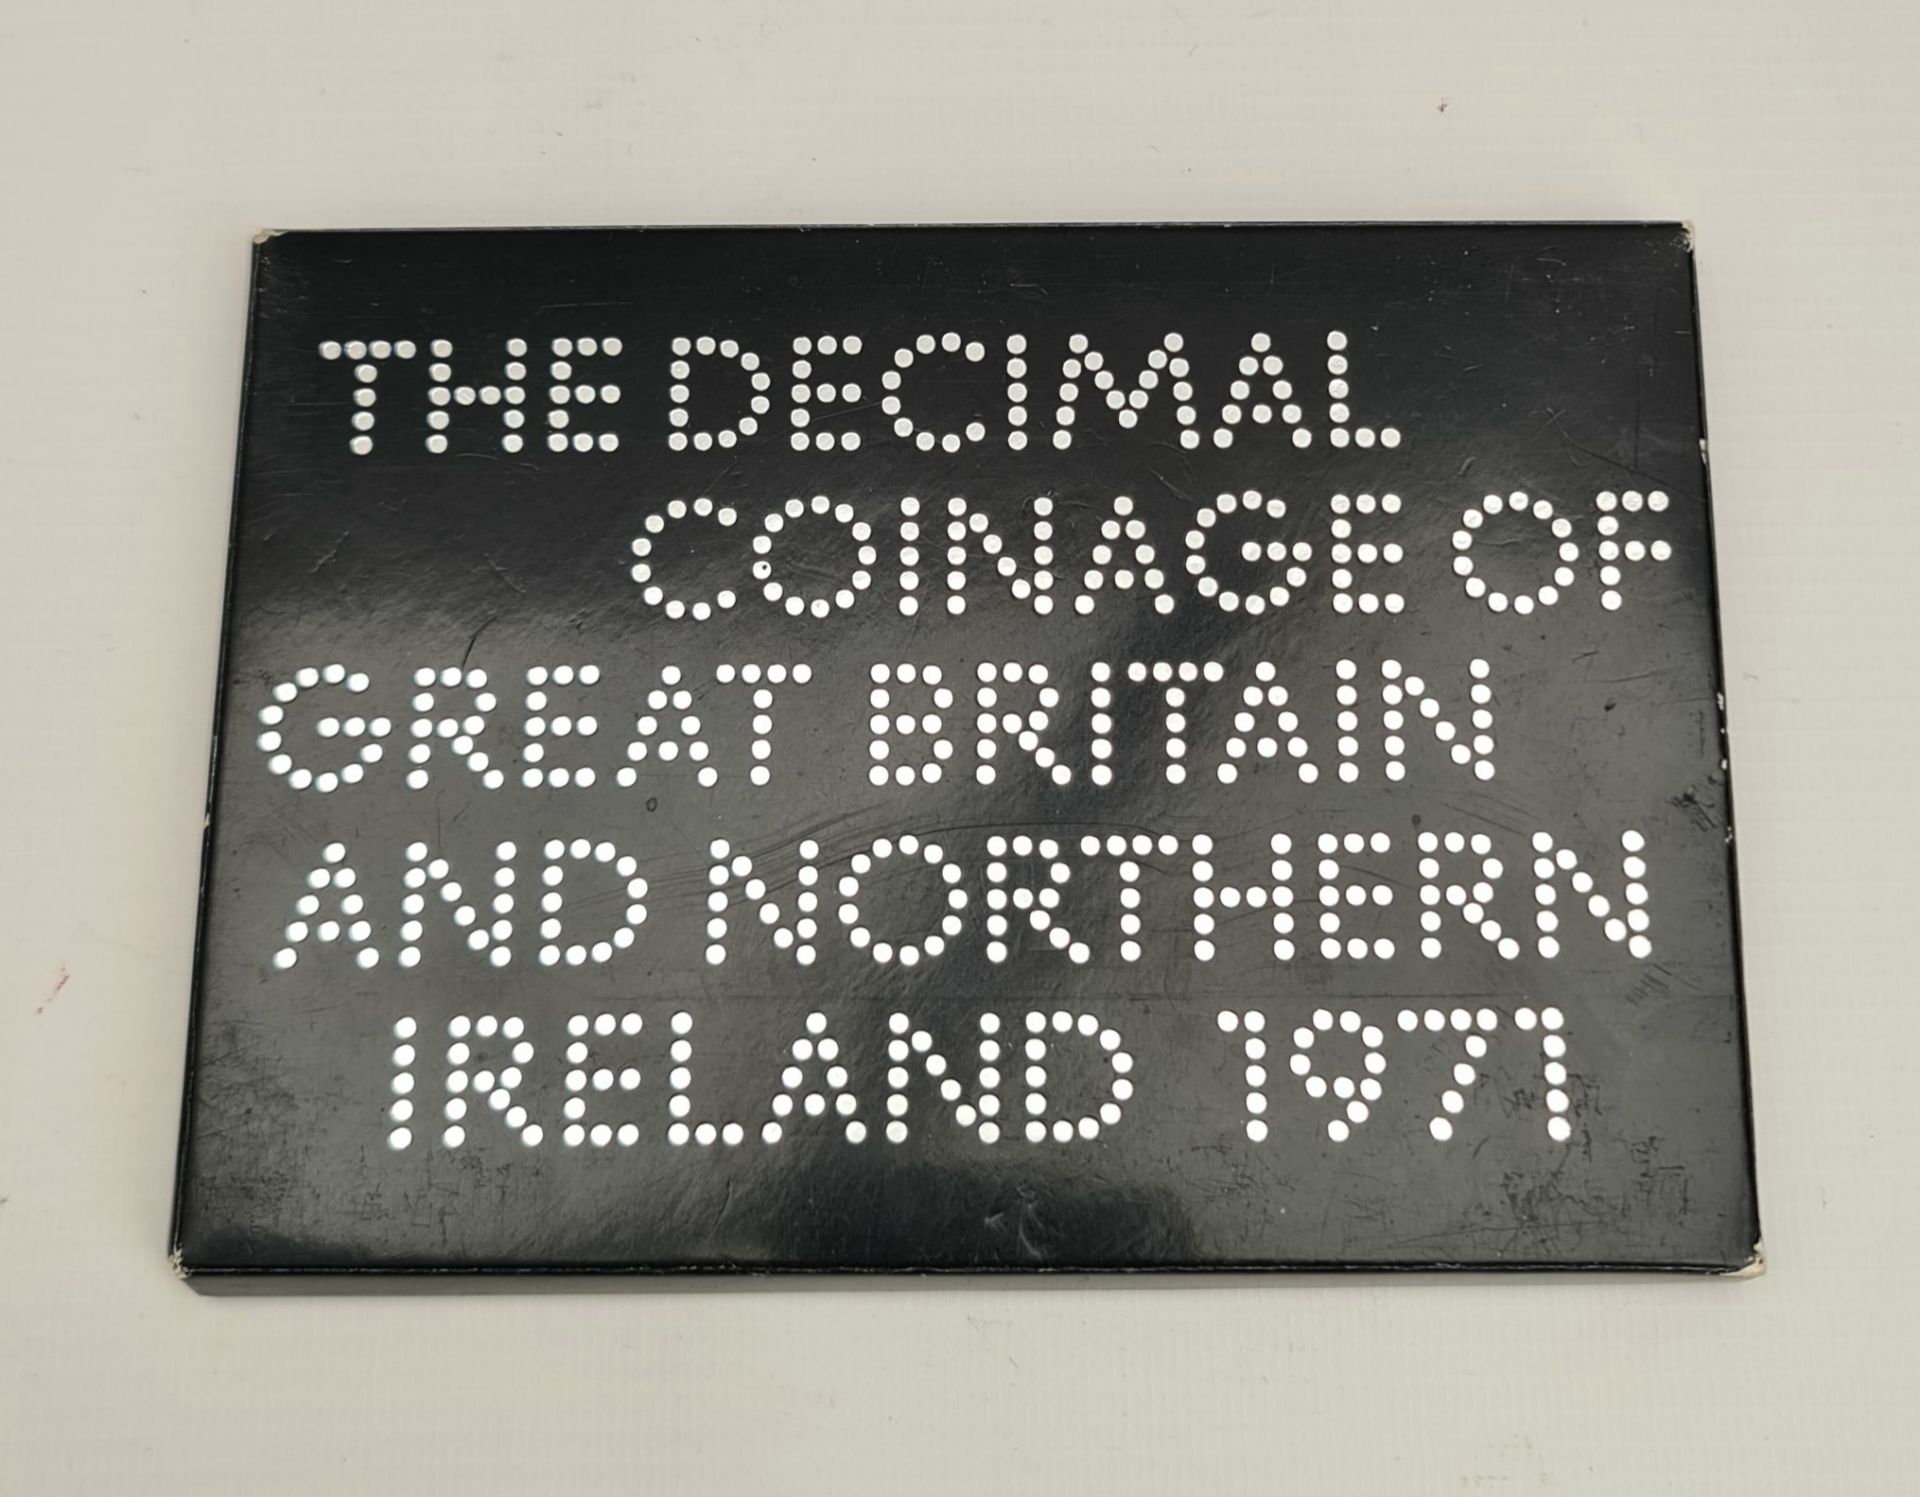 Vintage Royal Mint Proof Set of UK Decimal Coinage c1971 in Original Cover - Image 3 of 3